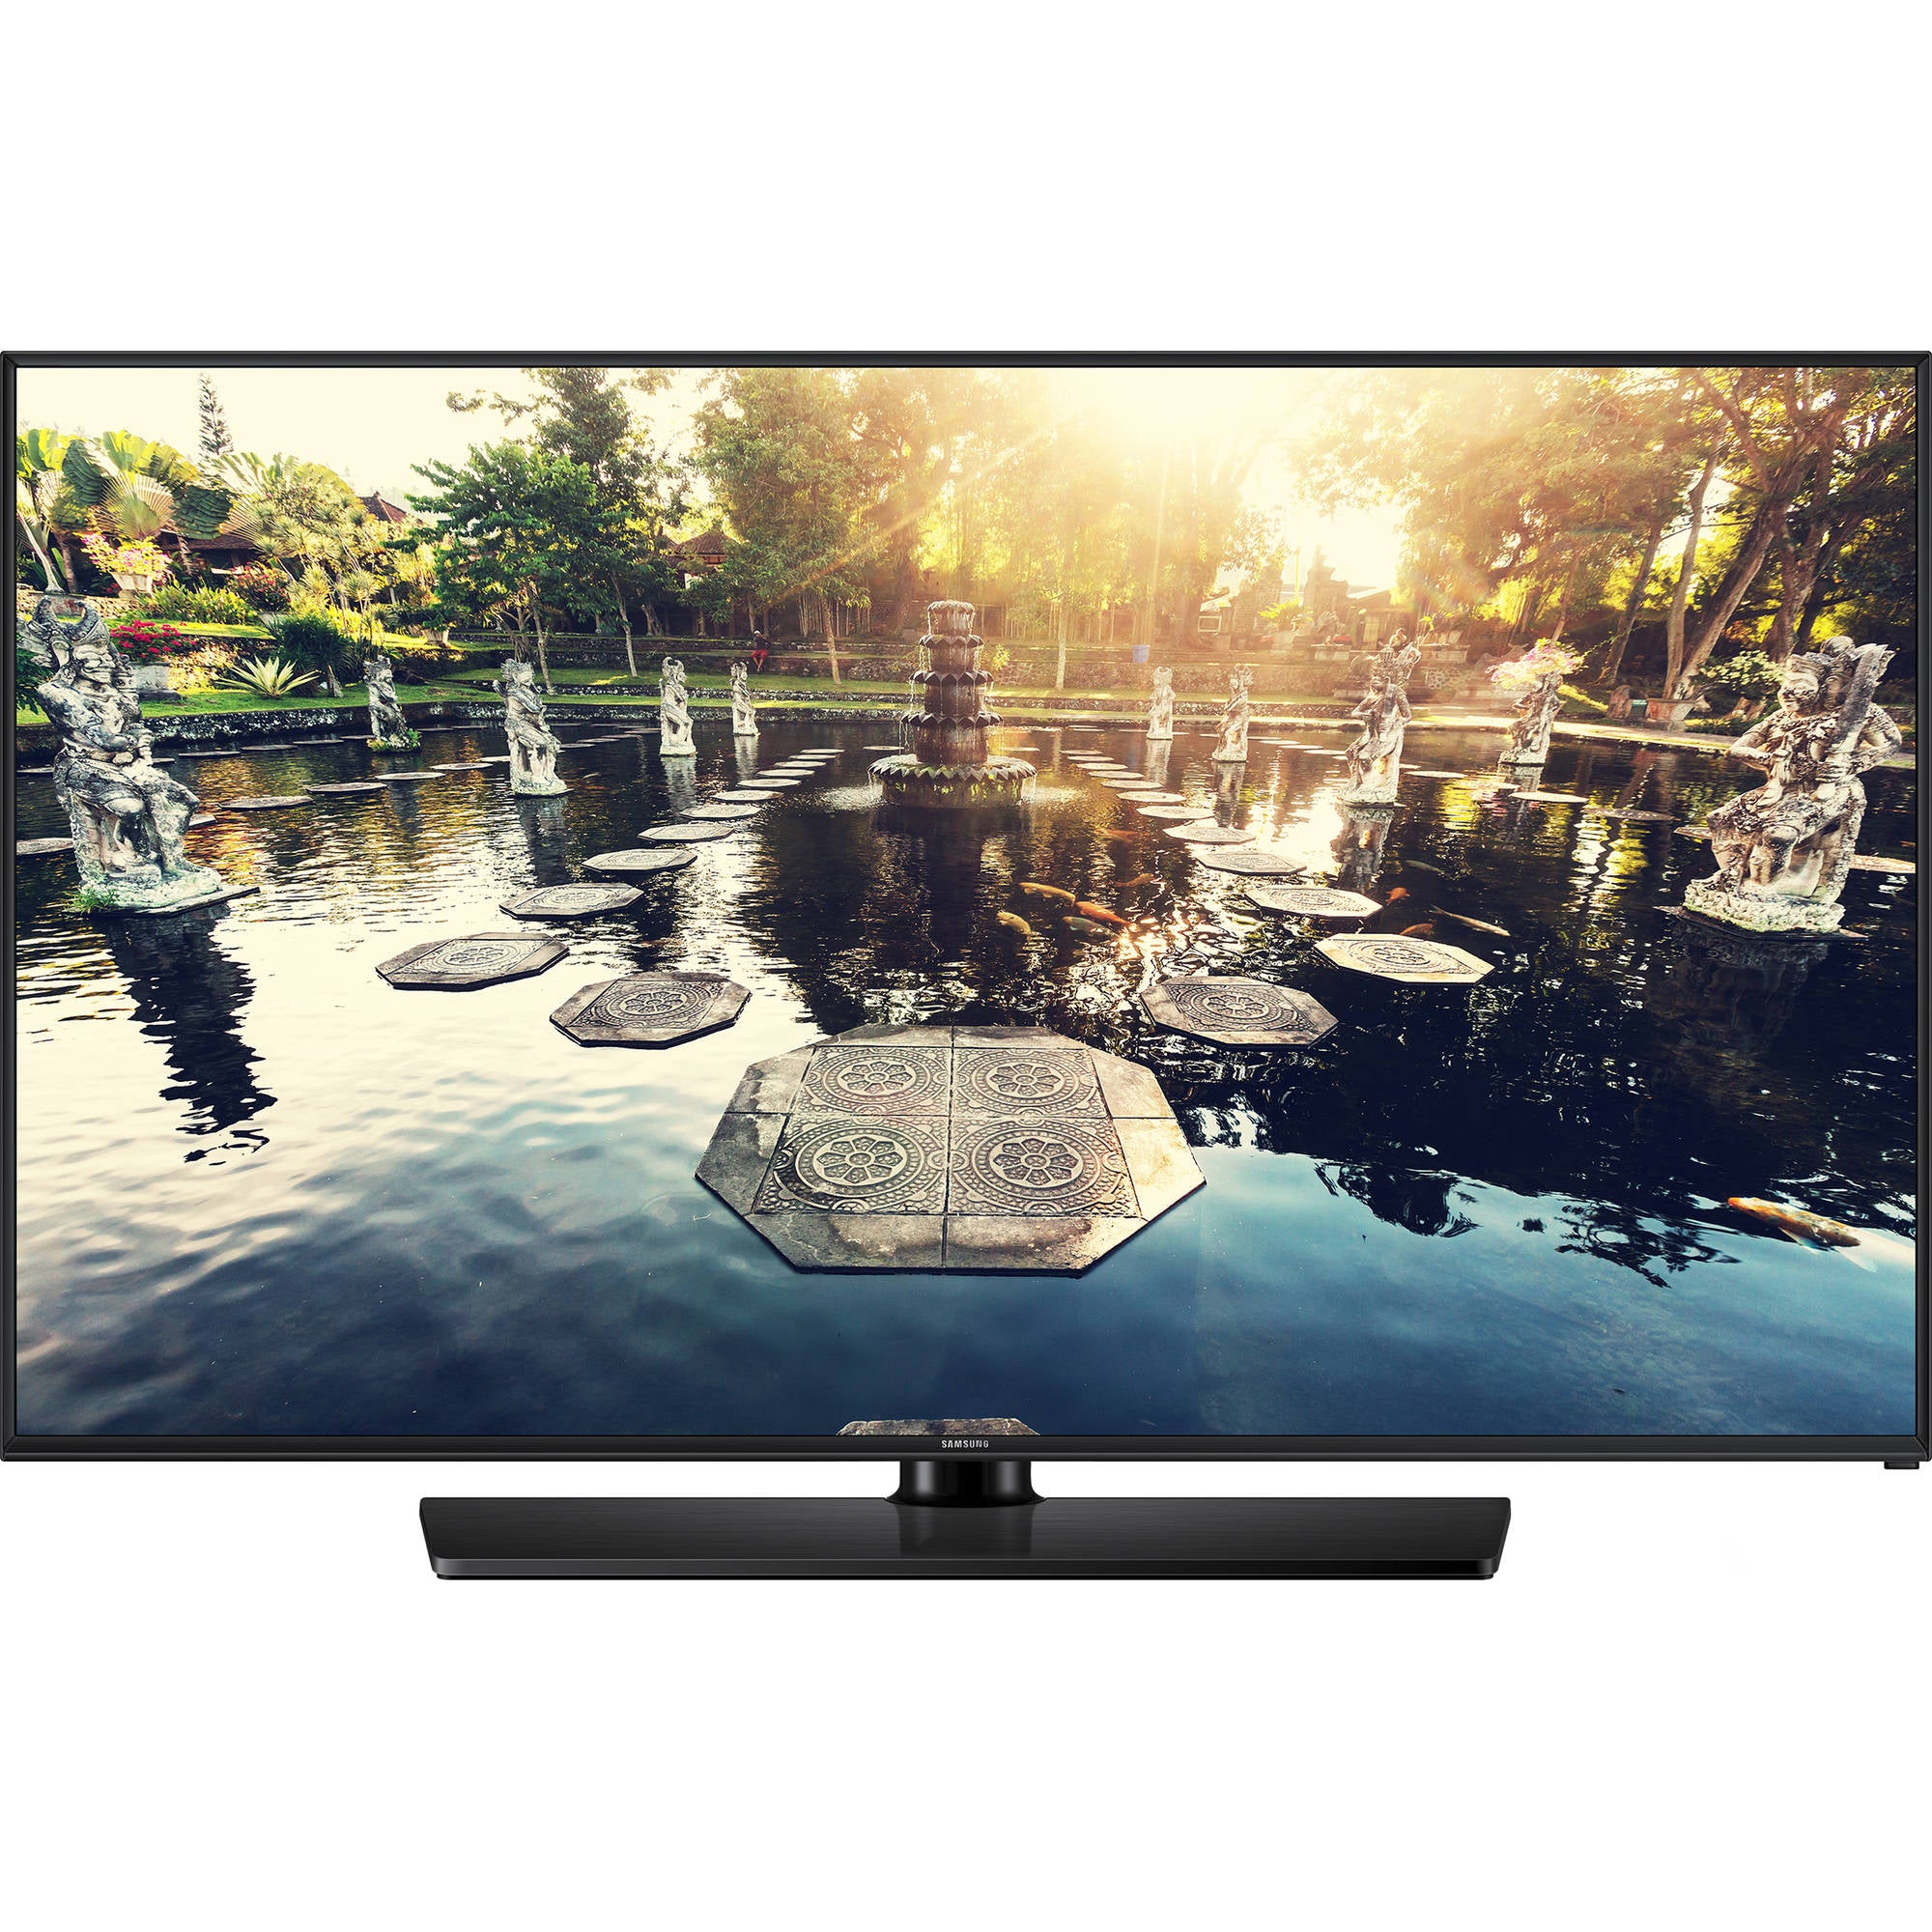 Samsung HG40NE690BFXZA 40" Full HD Slim Direct-Lit LED Hospitality Smart TV with Built-in Wi-Fi (Black)